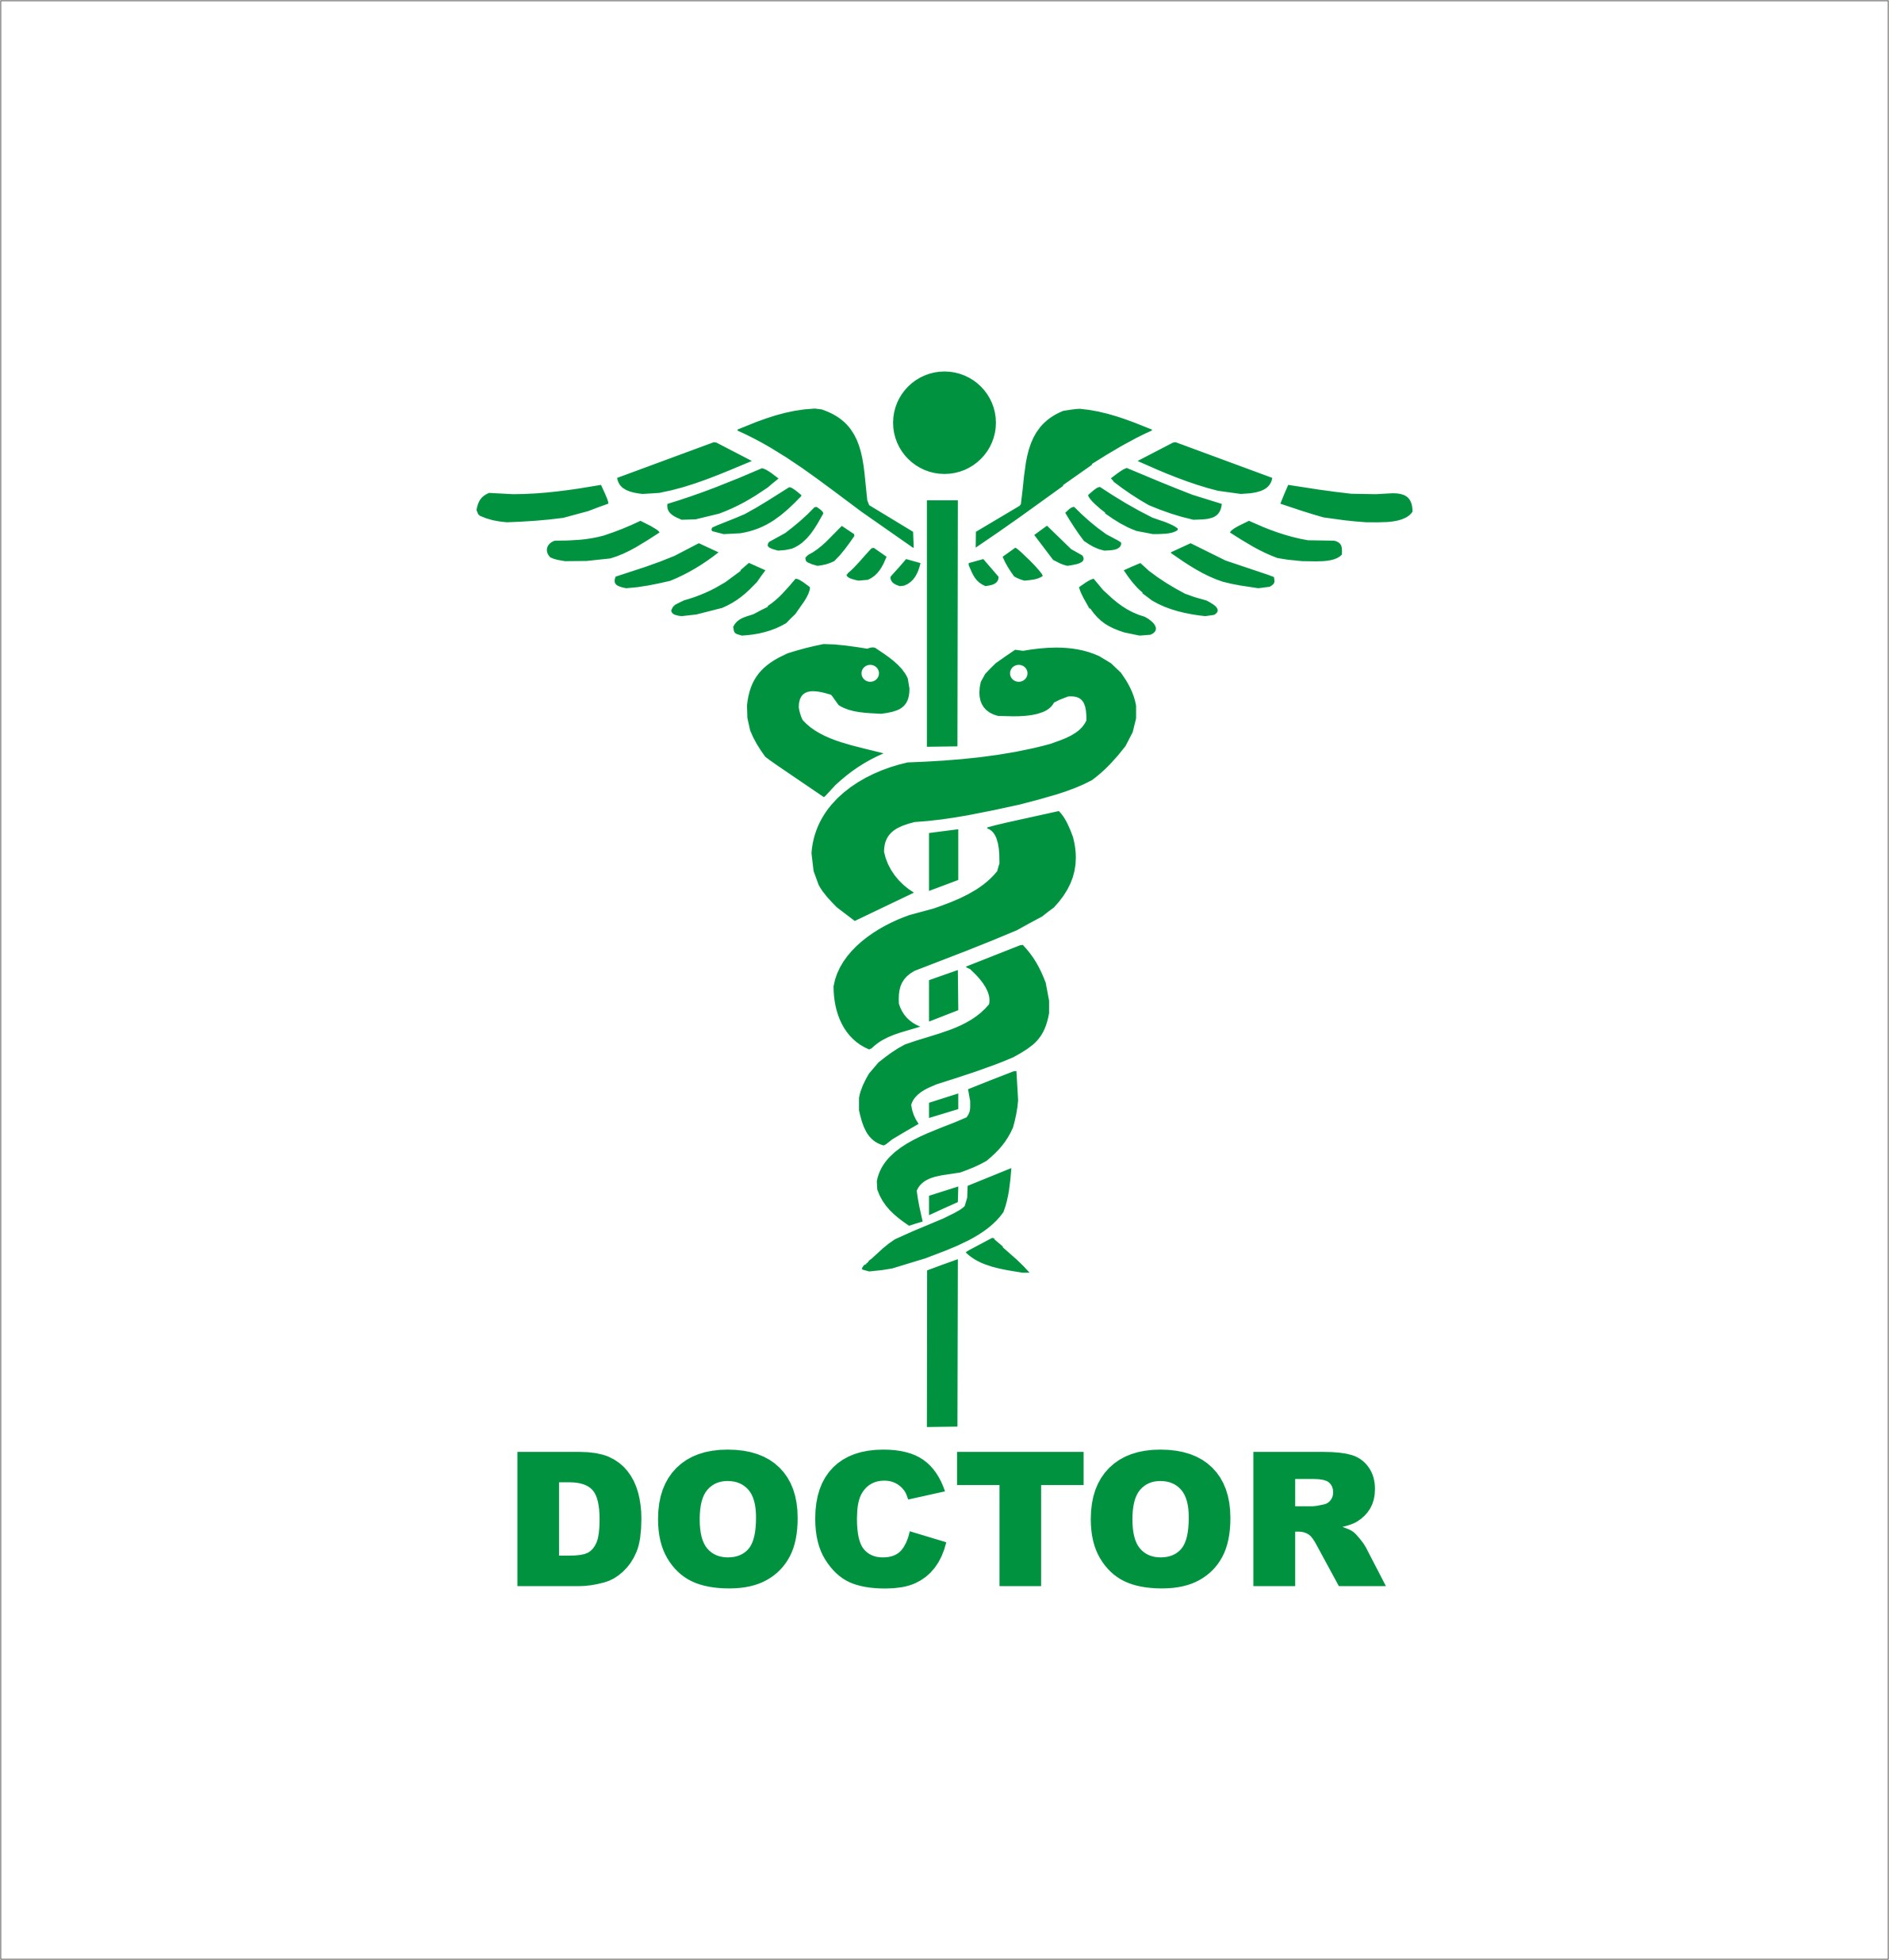 Buy Doctor Logo Sticker Online @ ₹179 from ShopClues